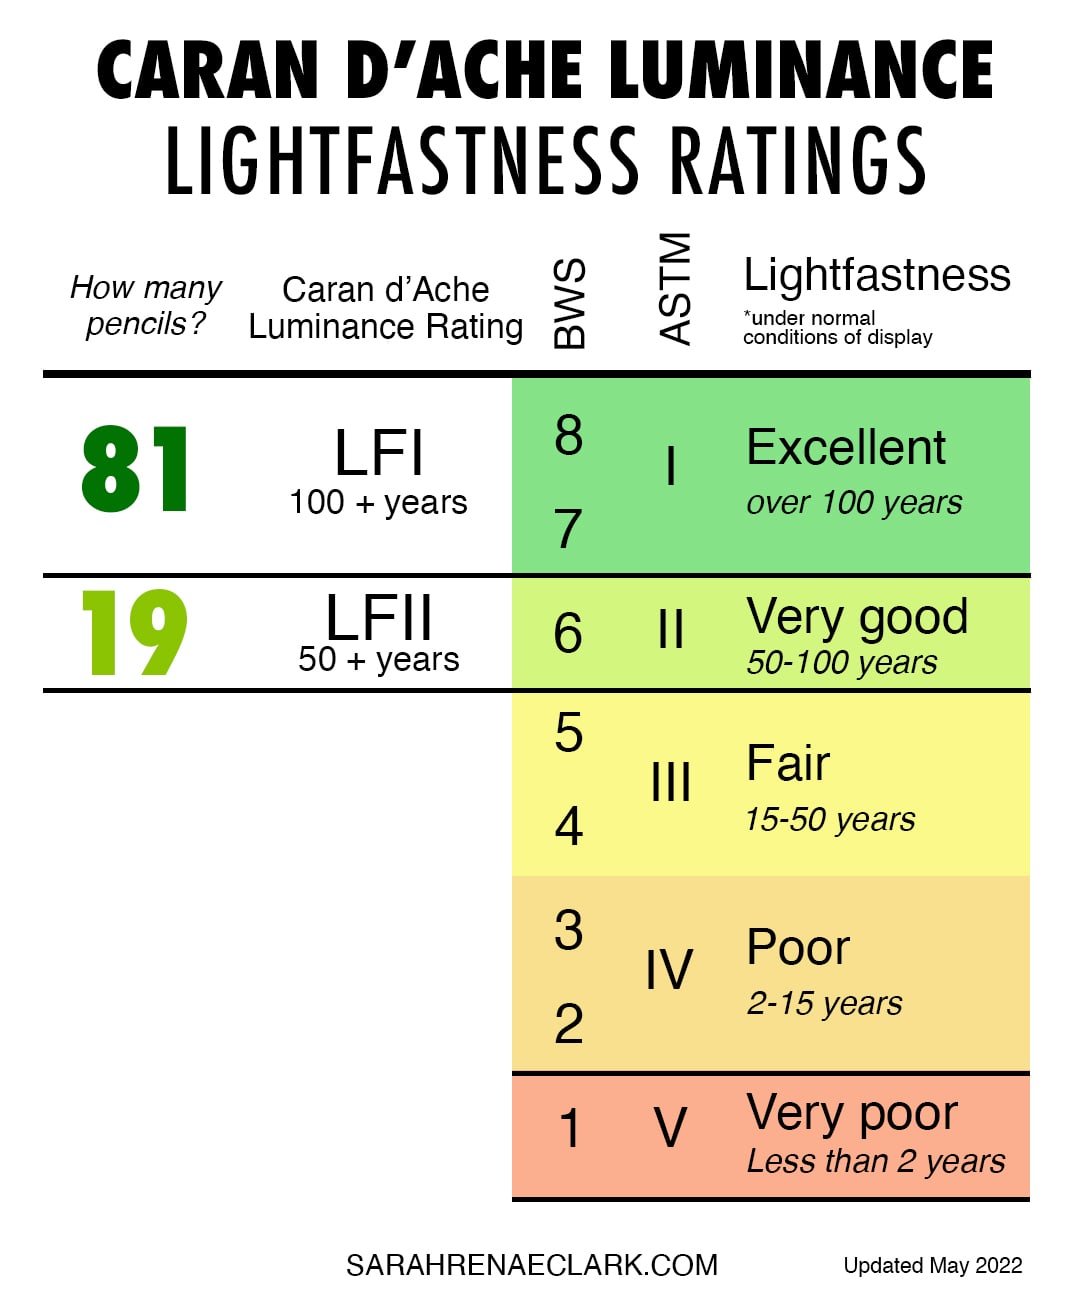 Caran d'Ache Luminance lightfastness ratings copy